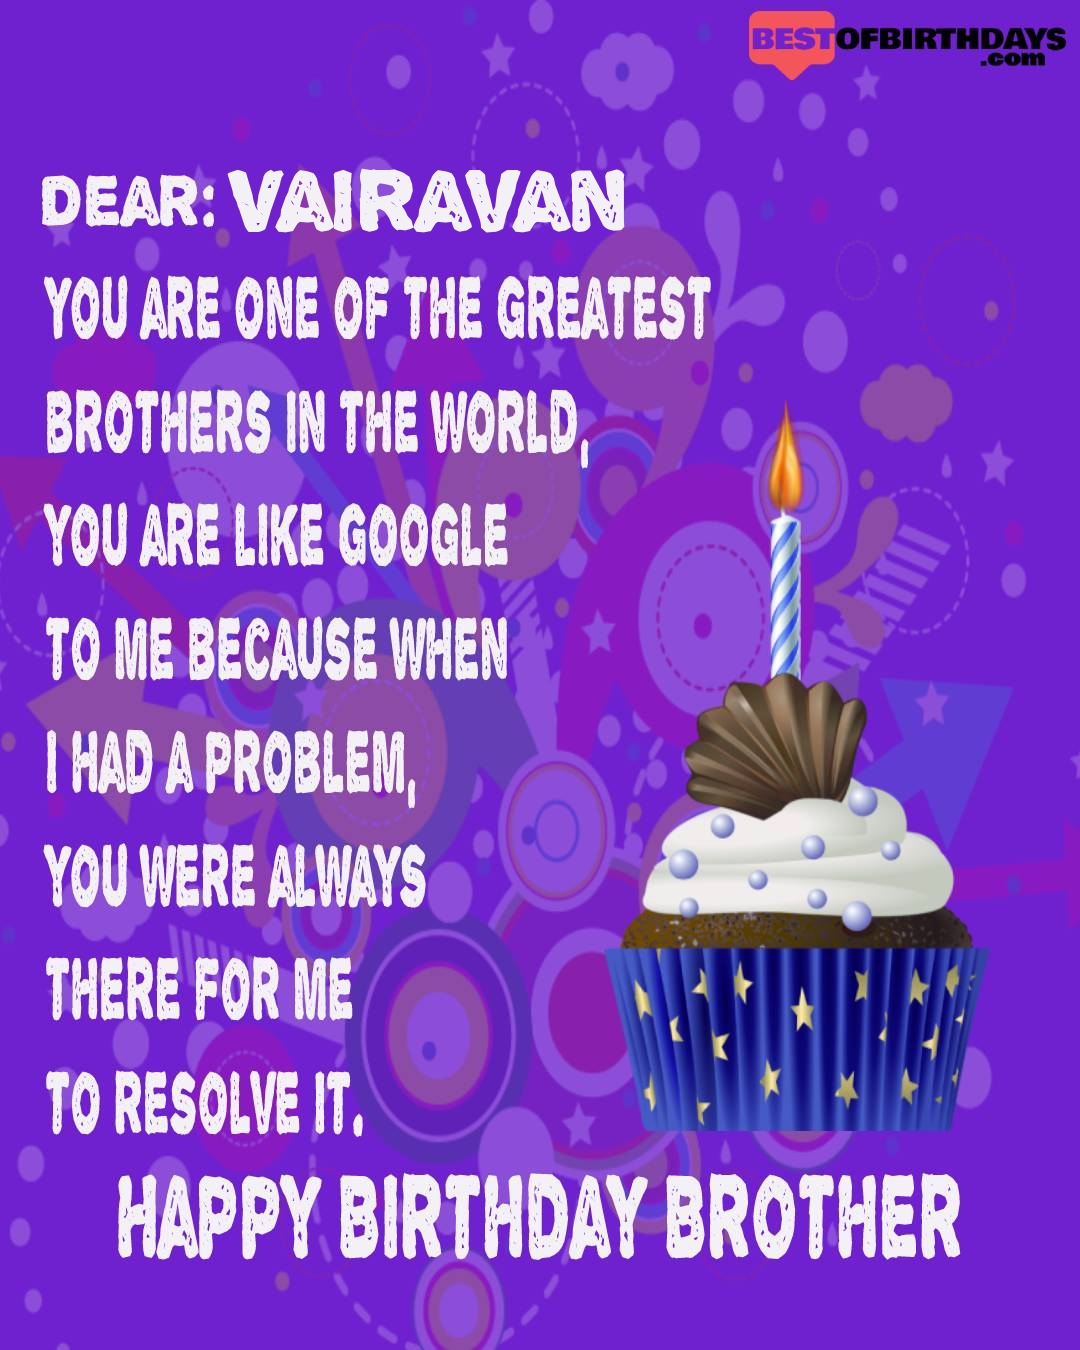 Happy birthday vairavan bhai brother bro